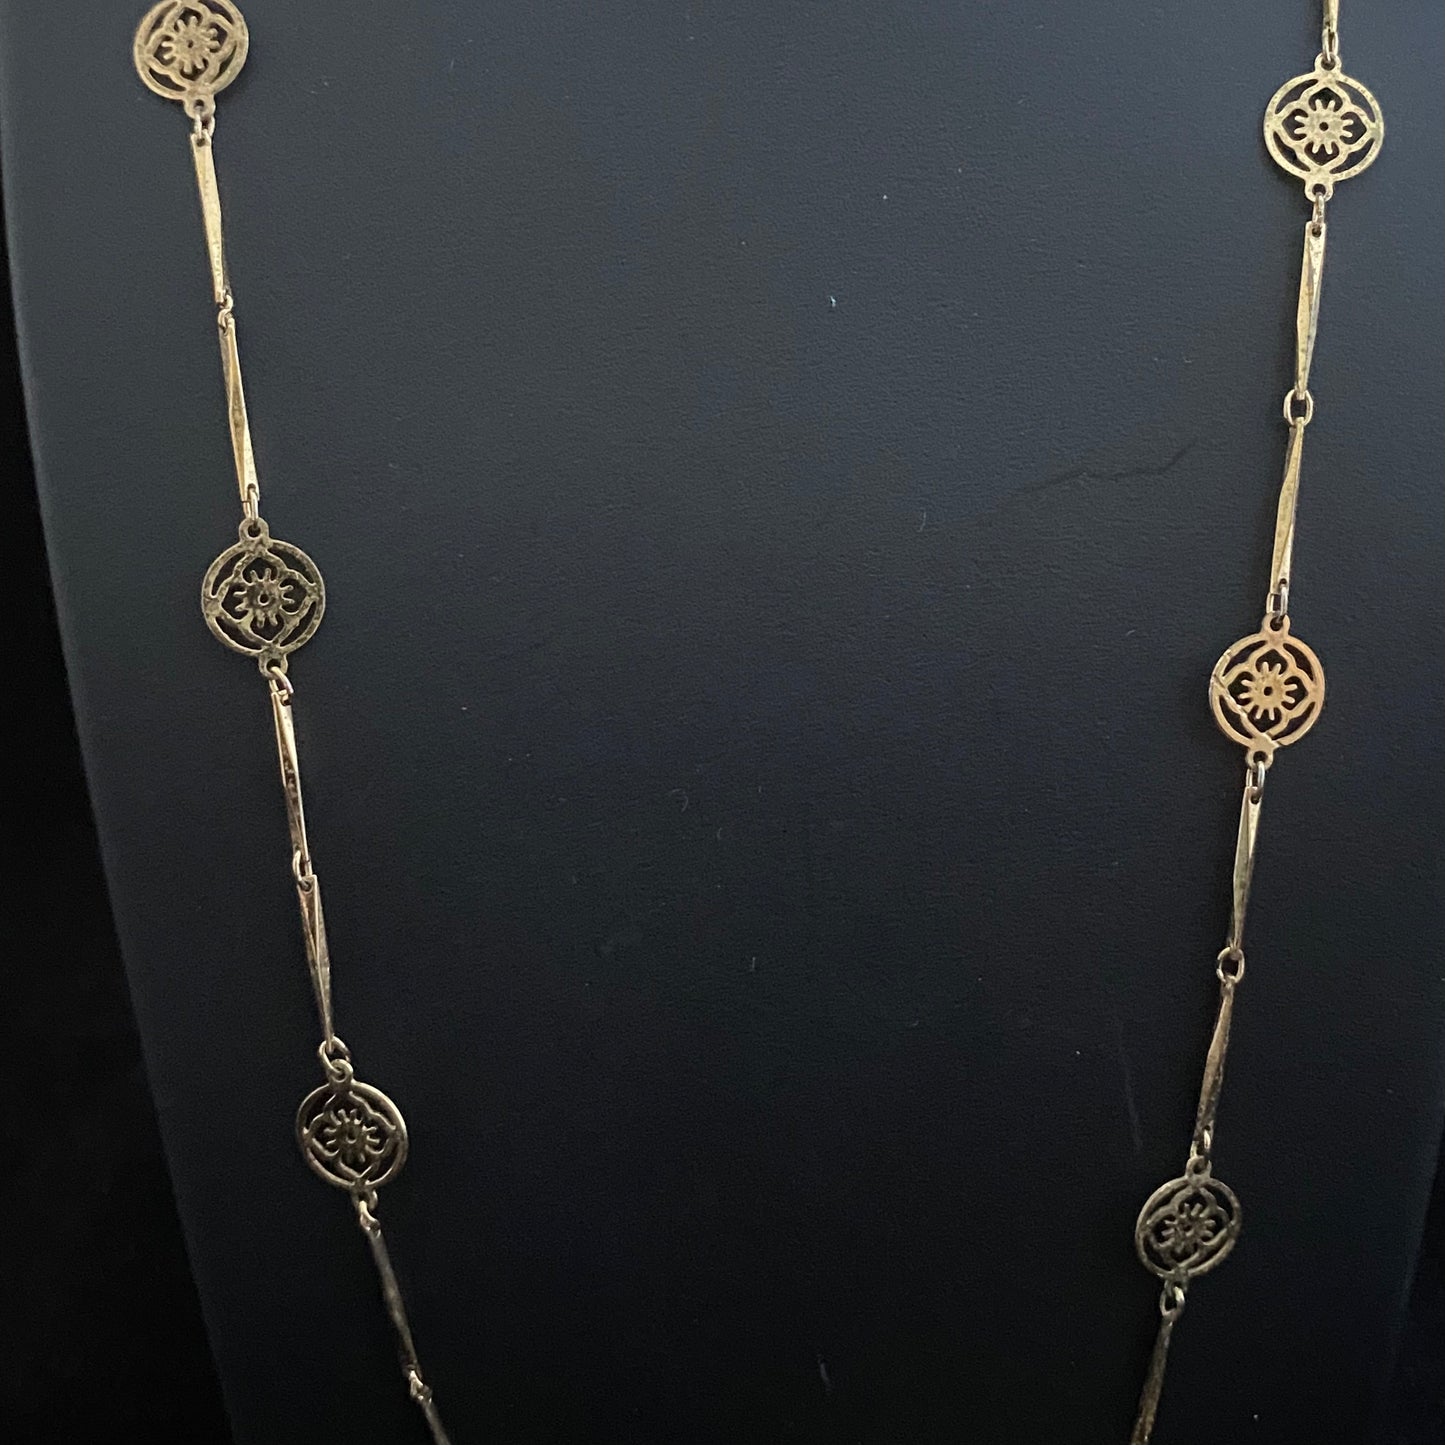 1979 Avon Flowerlace Necklace